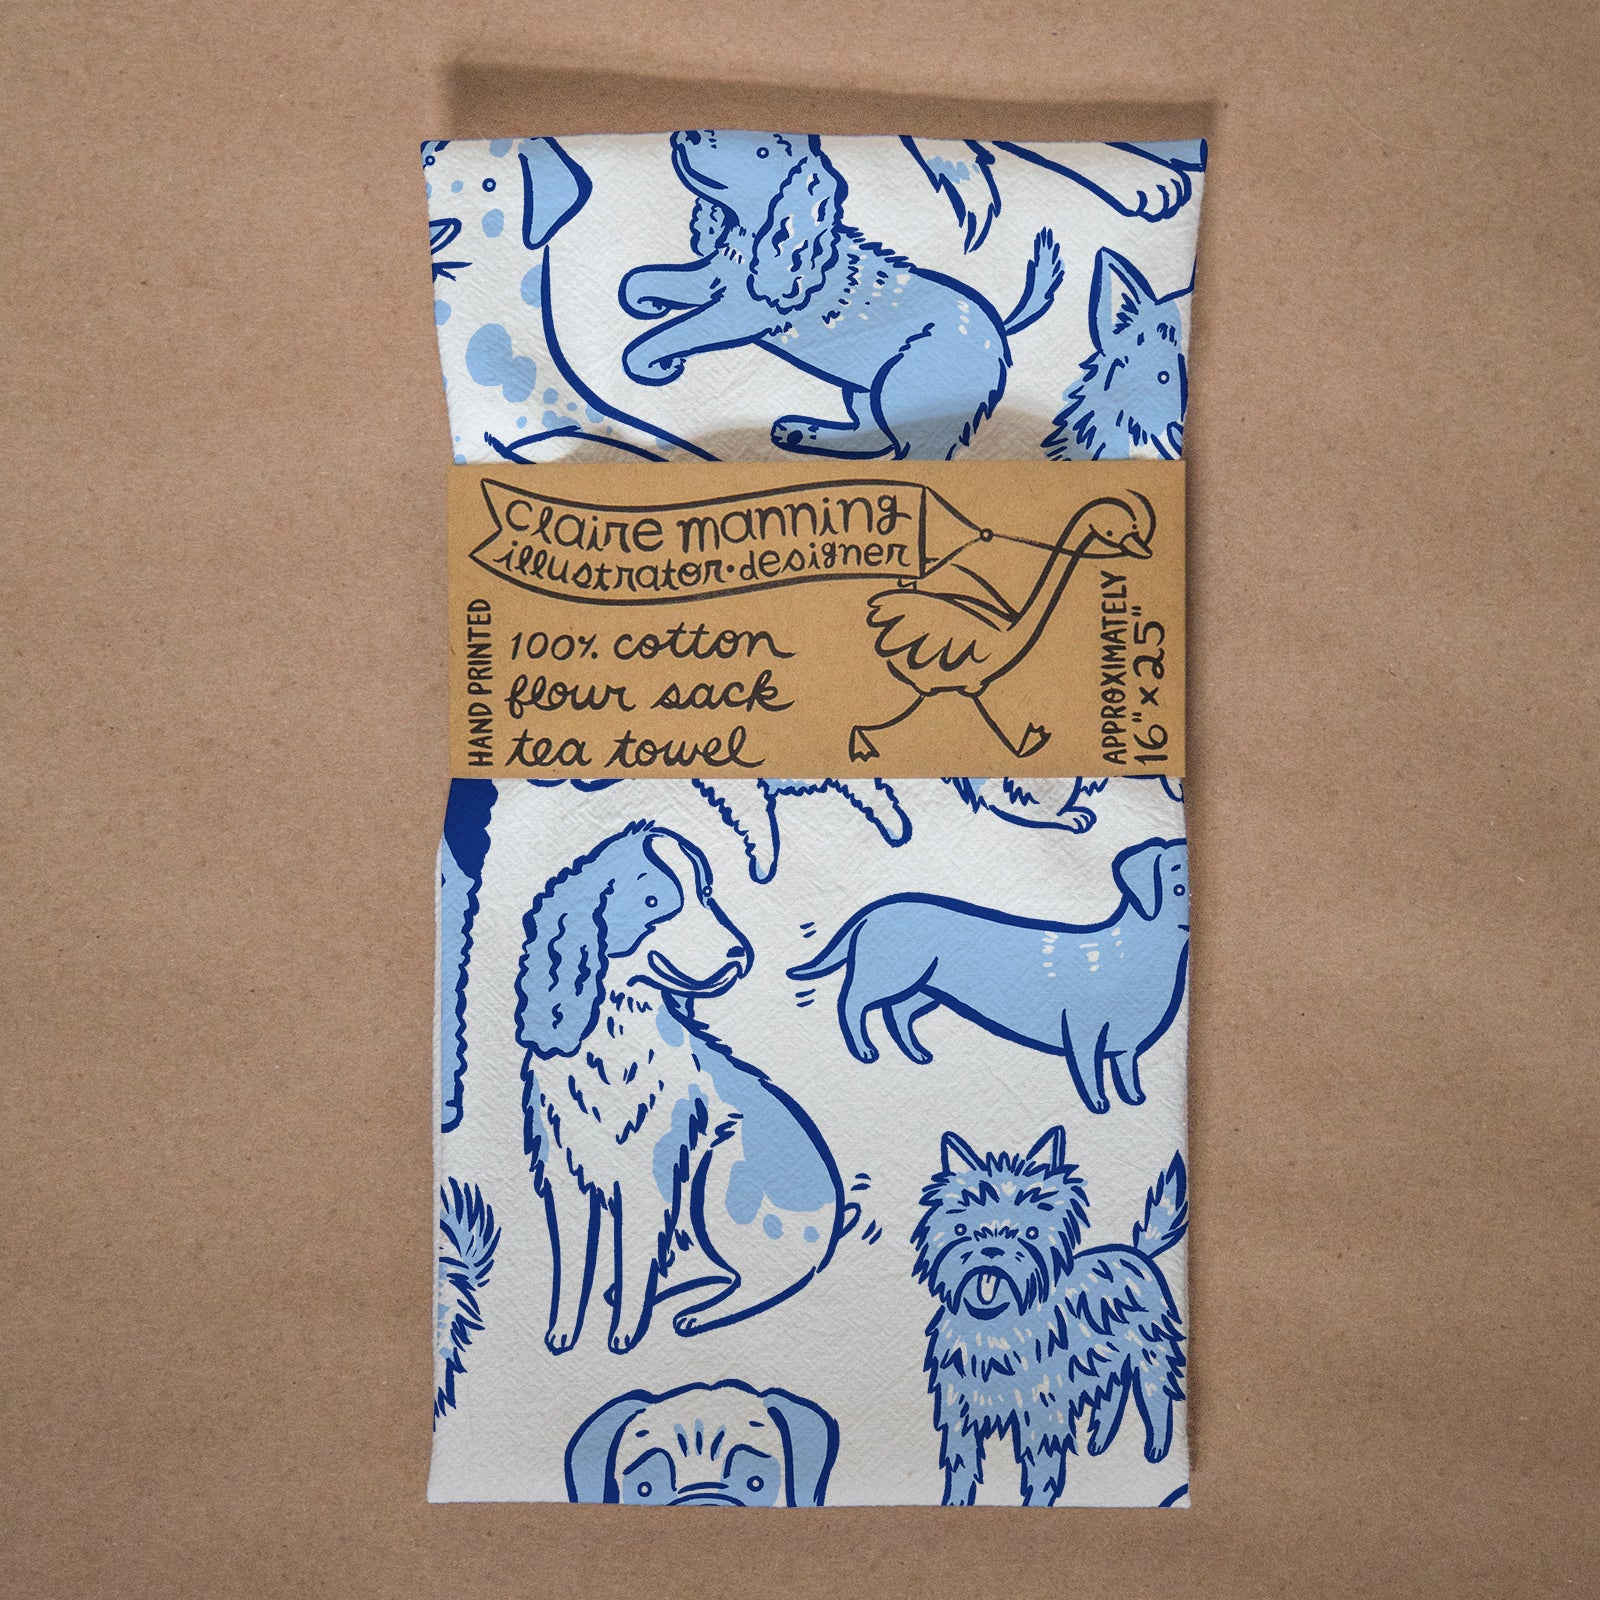 Total Dogs Flour Sack Tea Towel